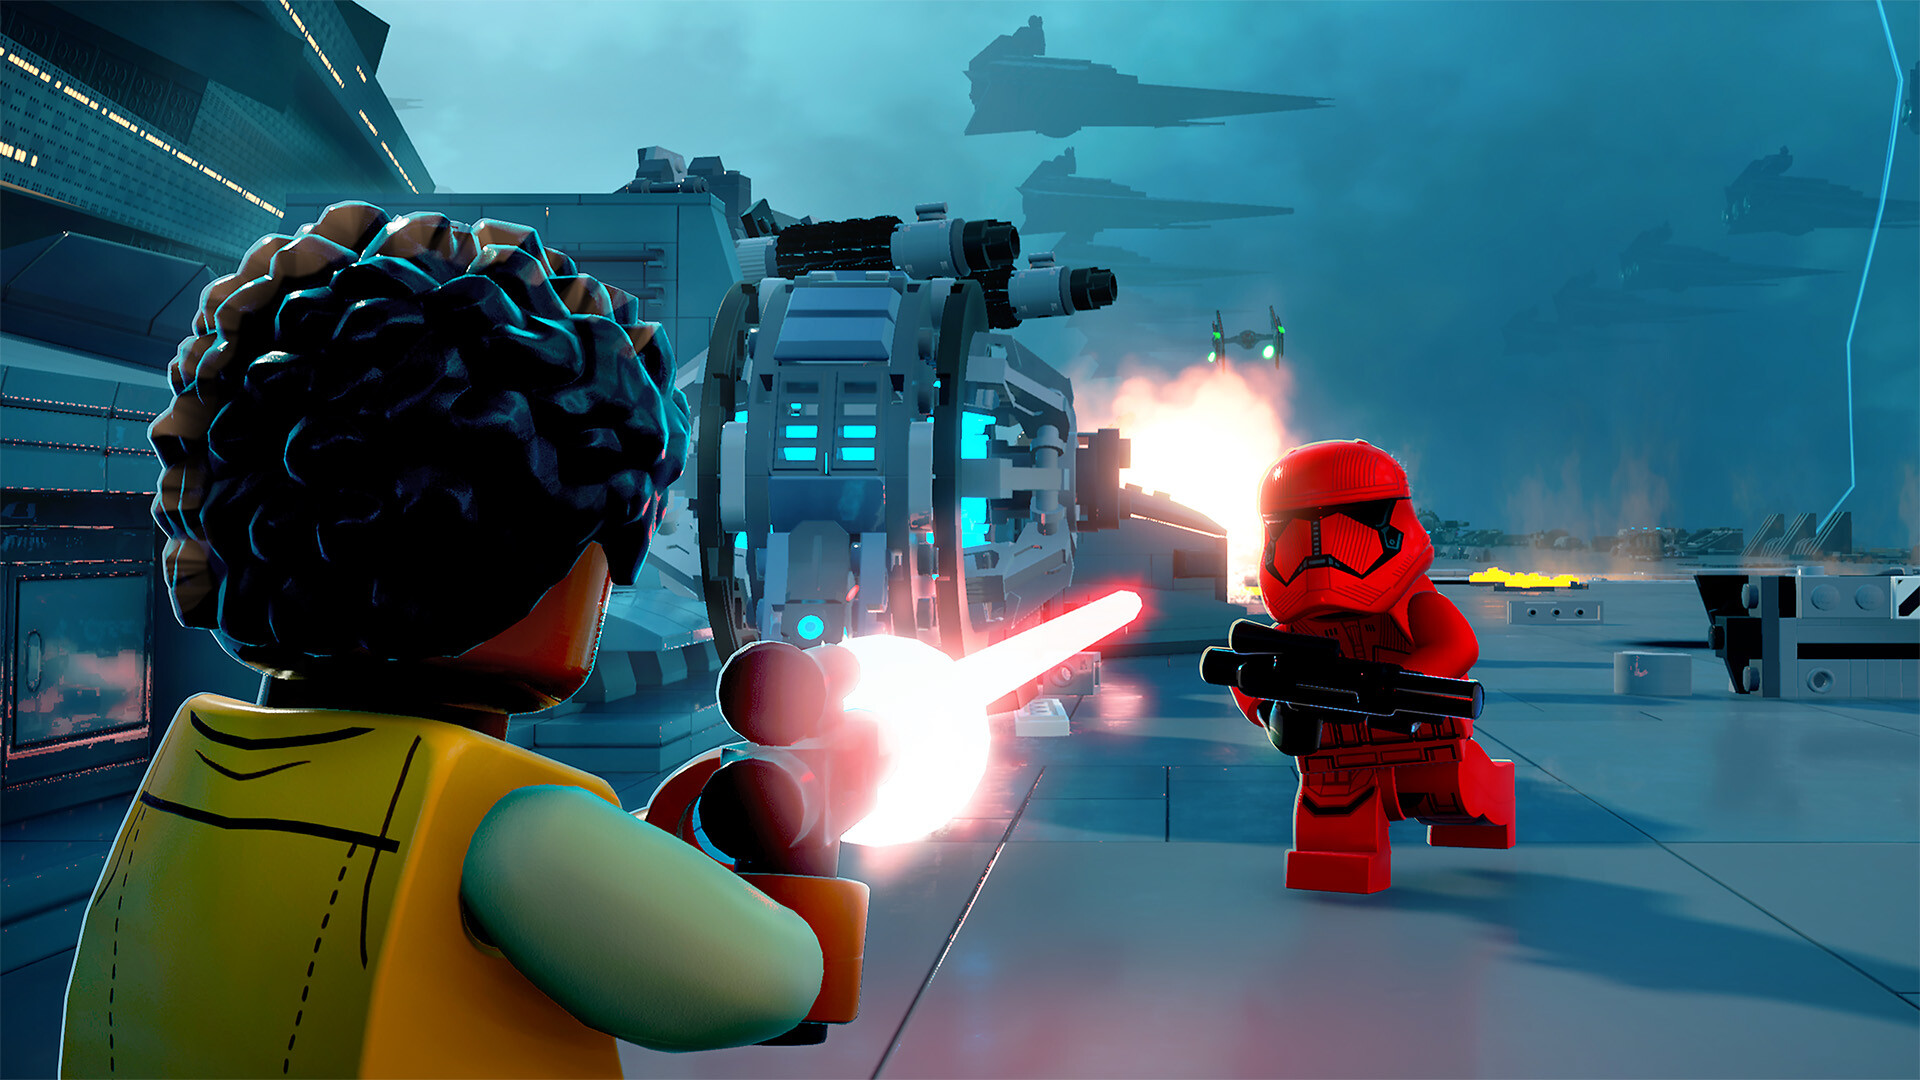 How long is LEGO Star Wars: The Skywalker Saga?